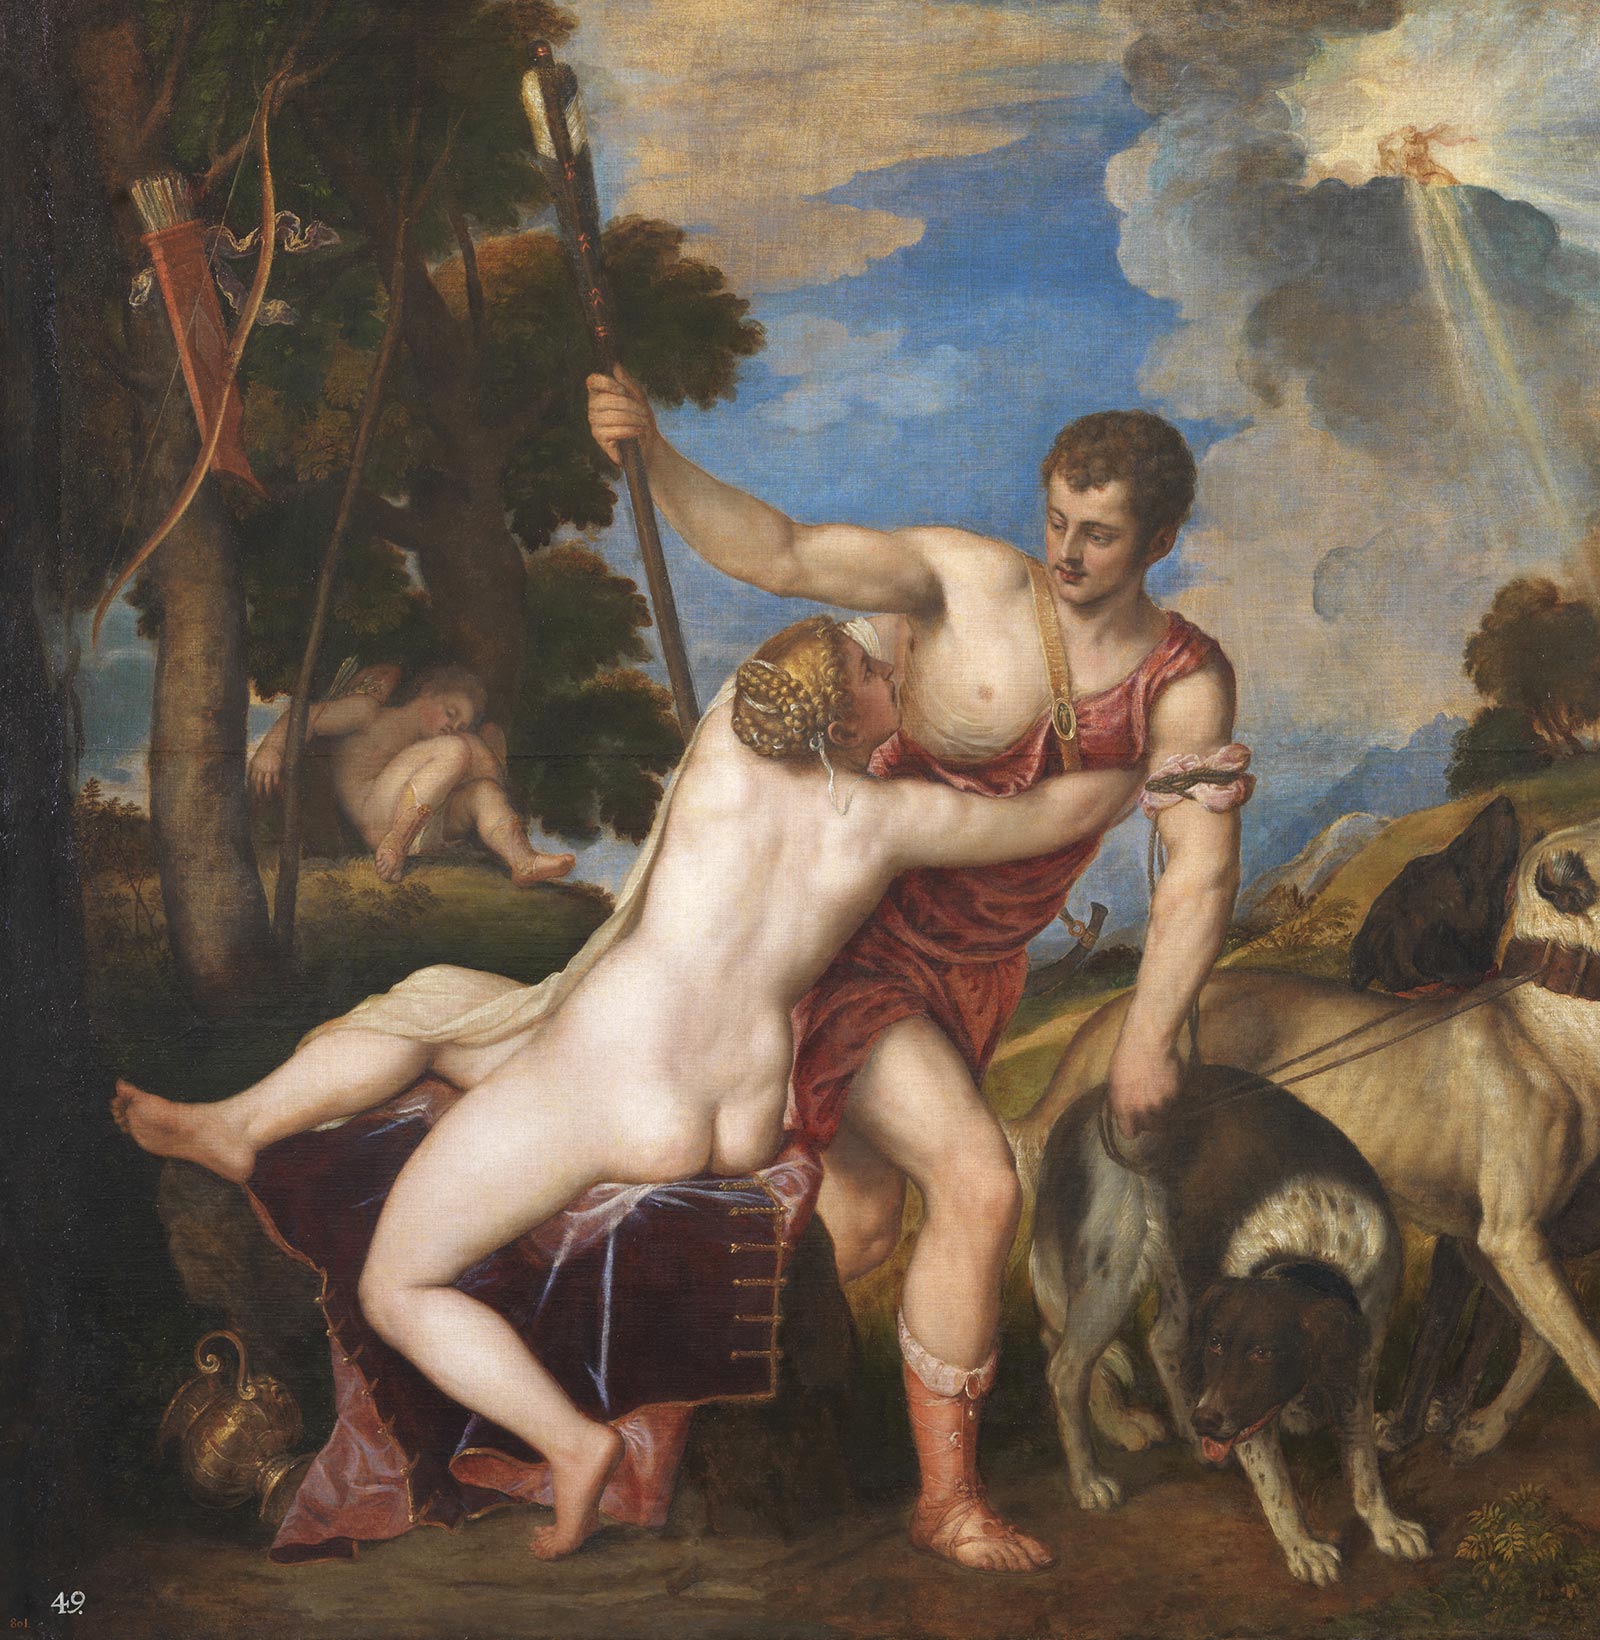 Titian (Tiziano Vecellio), Venus and Adonis (1485/90)